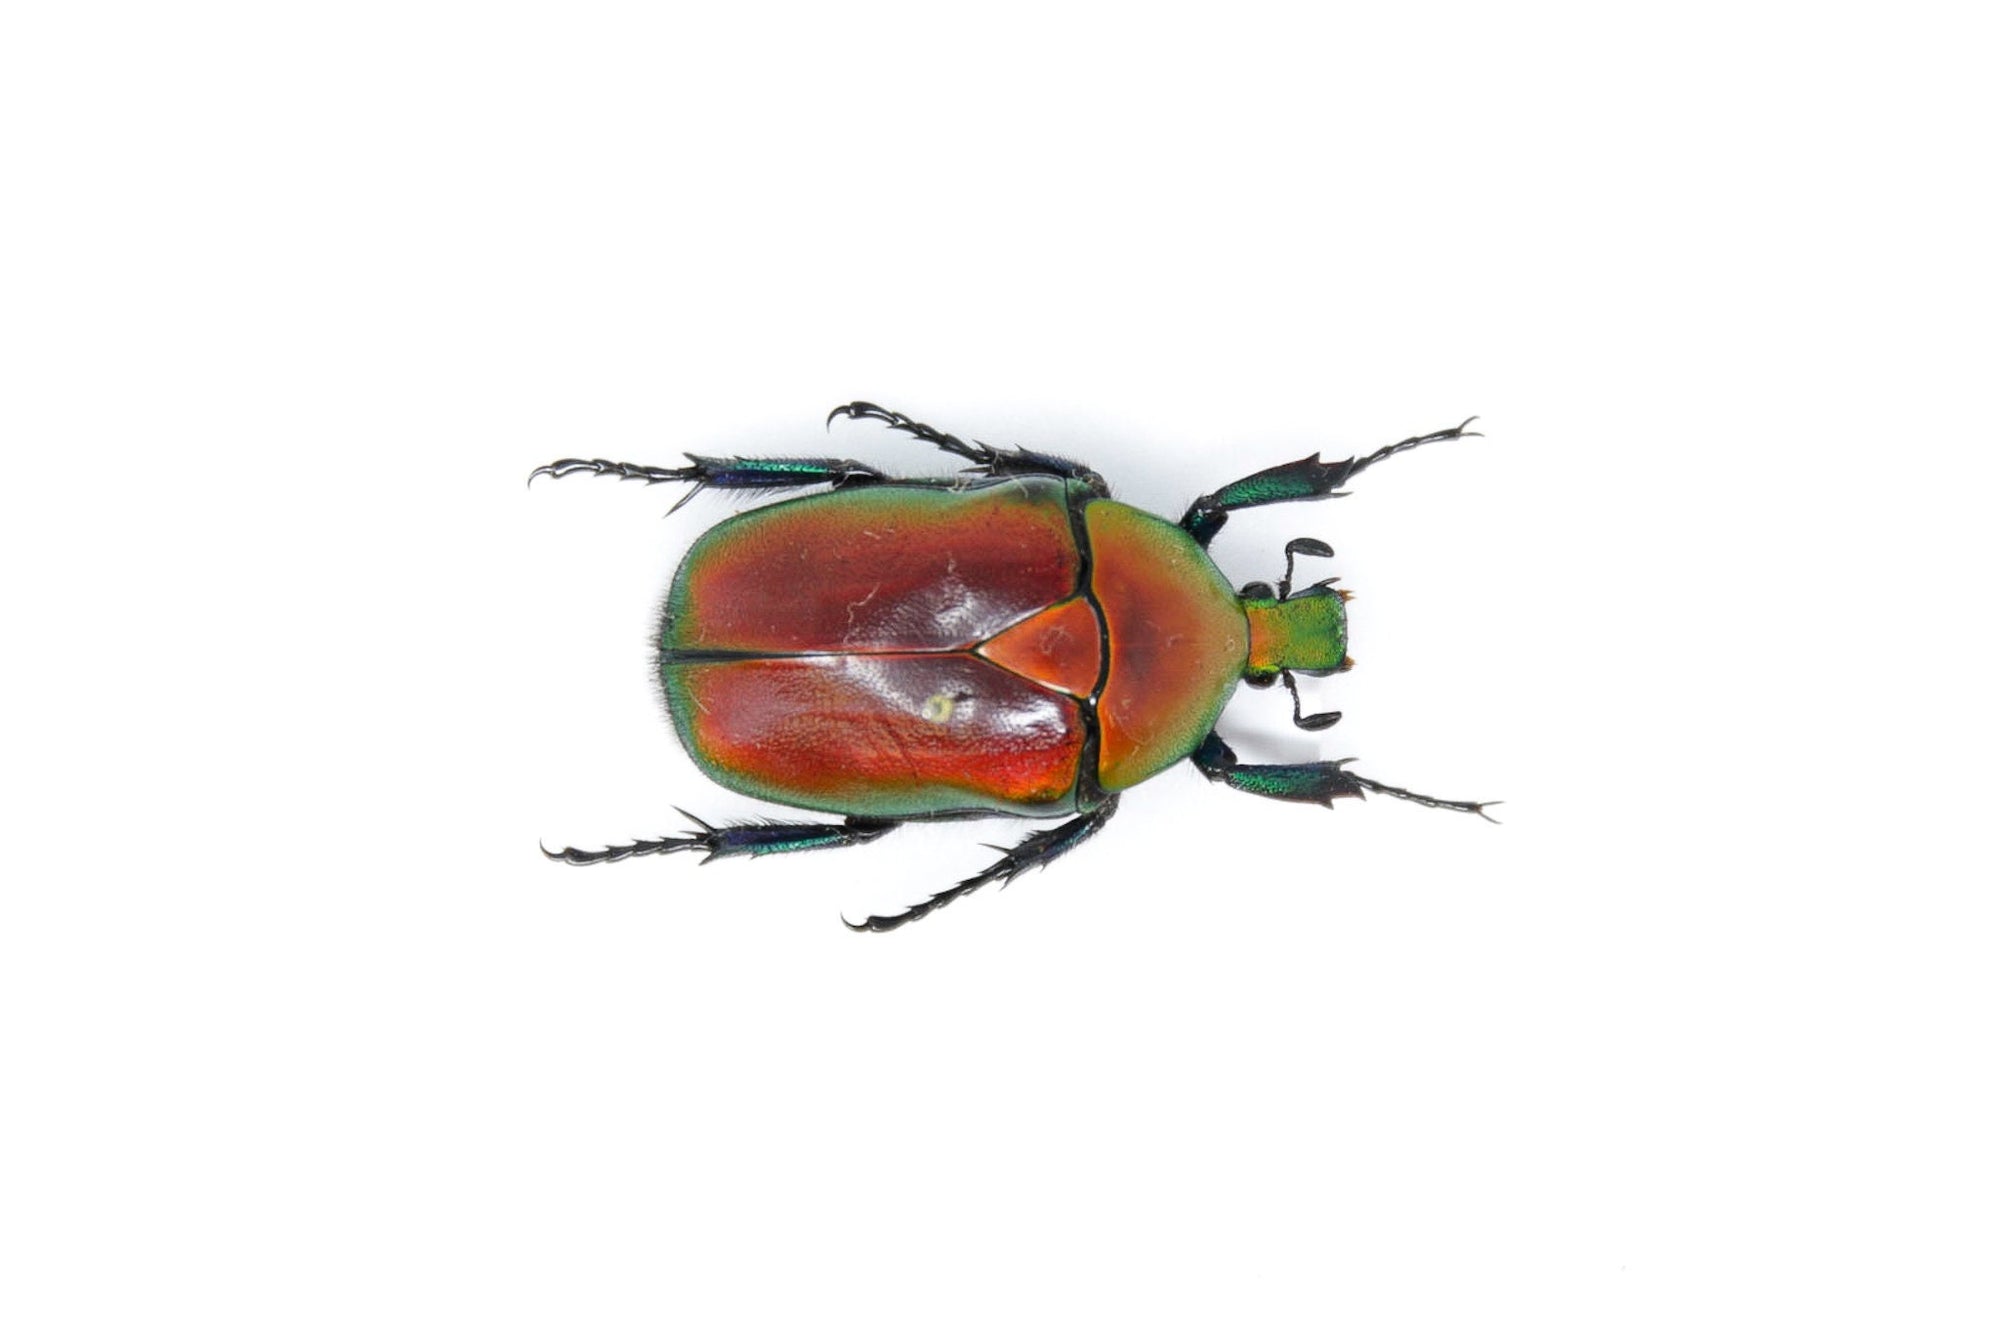 Torynorrhina flammea 32.6mm, Thailand, A1 Real Beetle Pinned Set Specimen, Entomology Taxidermy #OC47